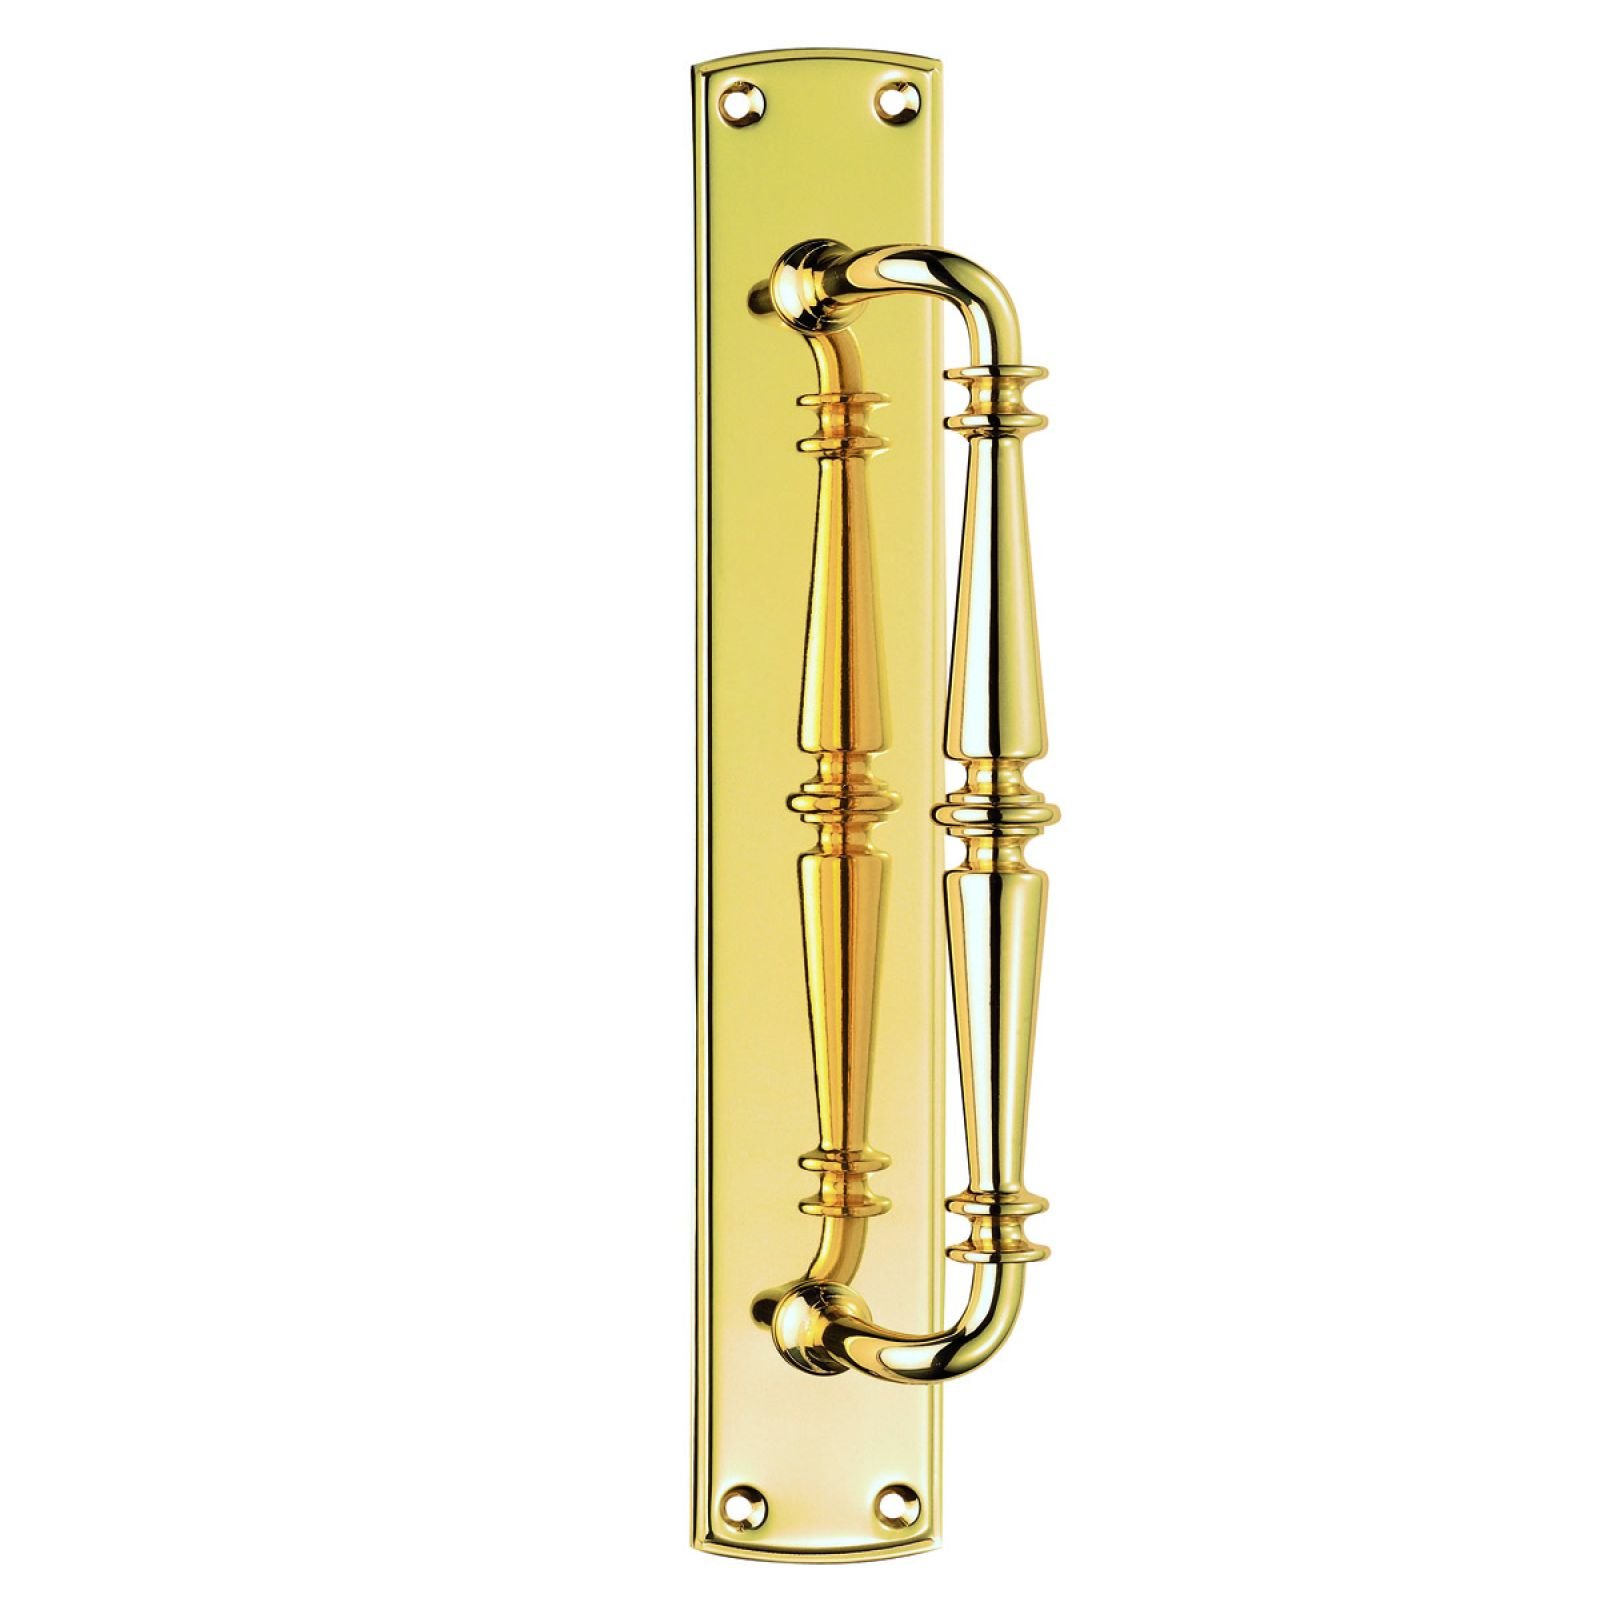 Ornate Brass Pull handle